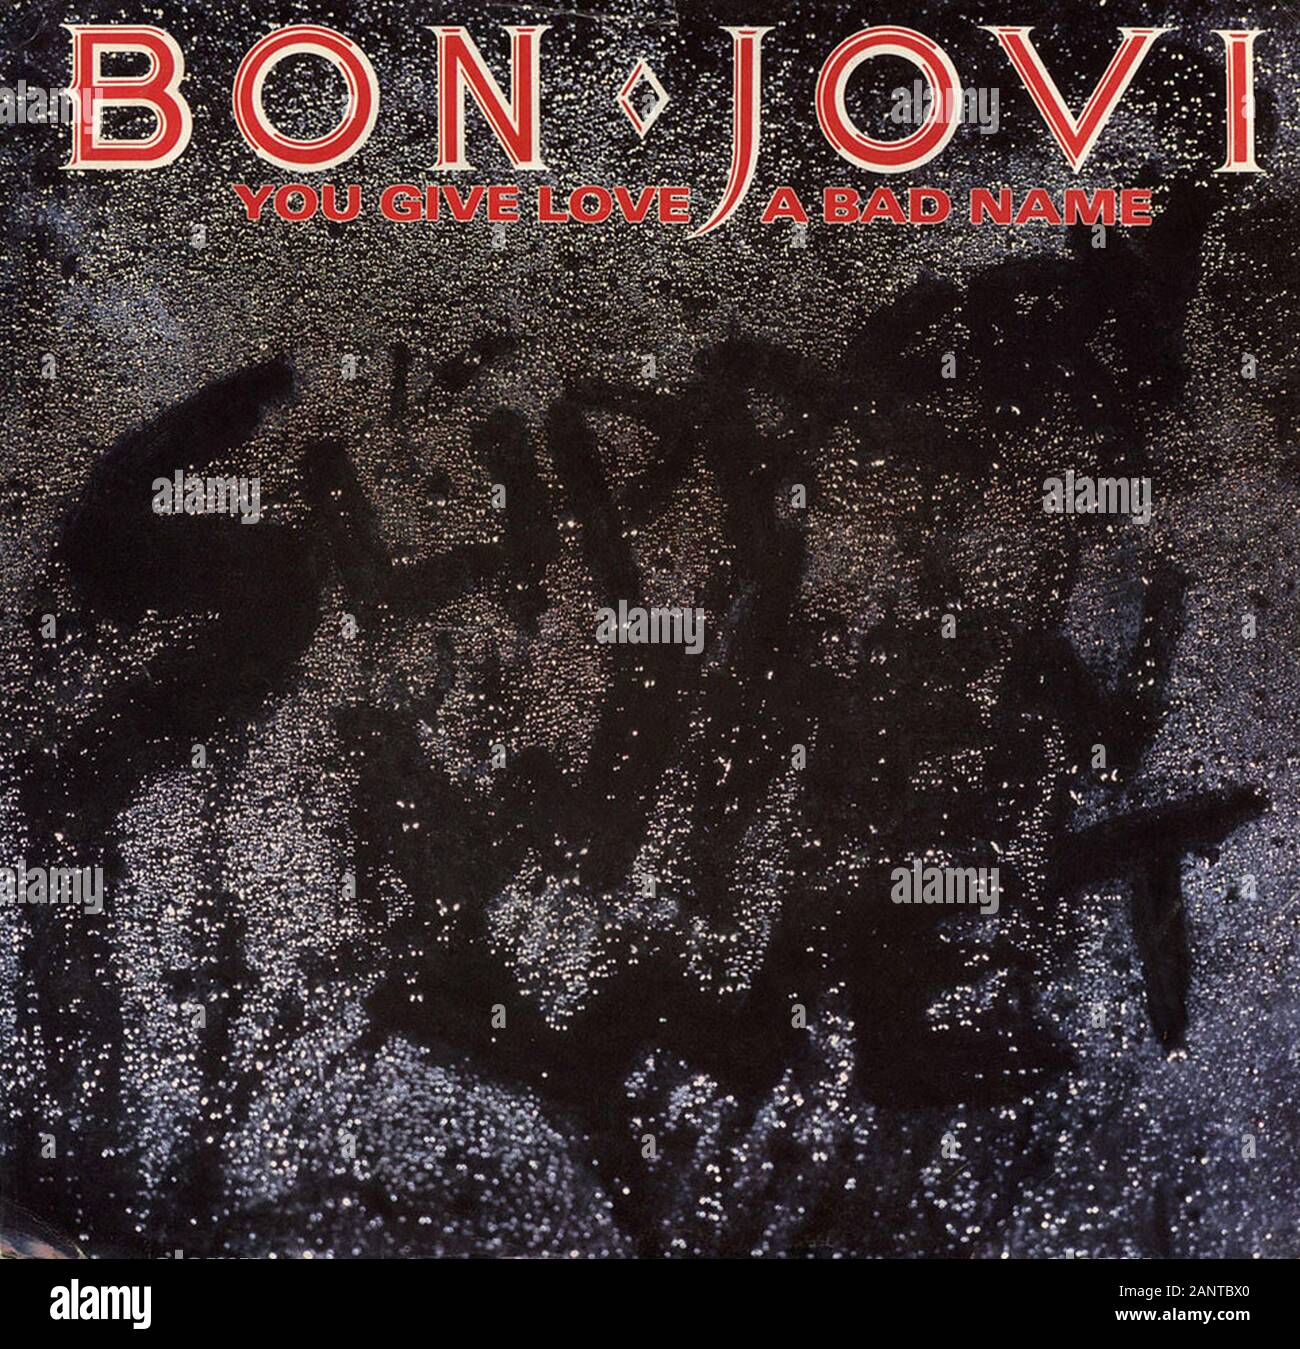 Bon Jovi / You Give Love A Bad Name